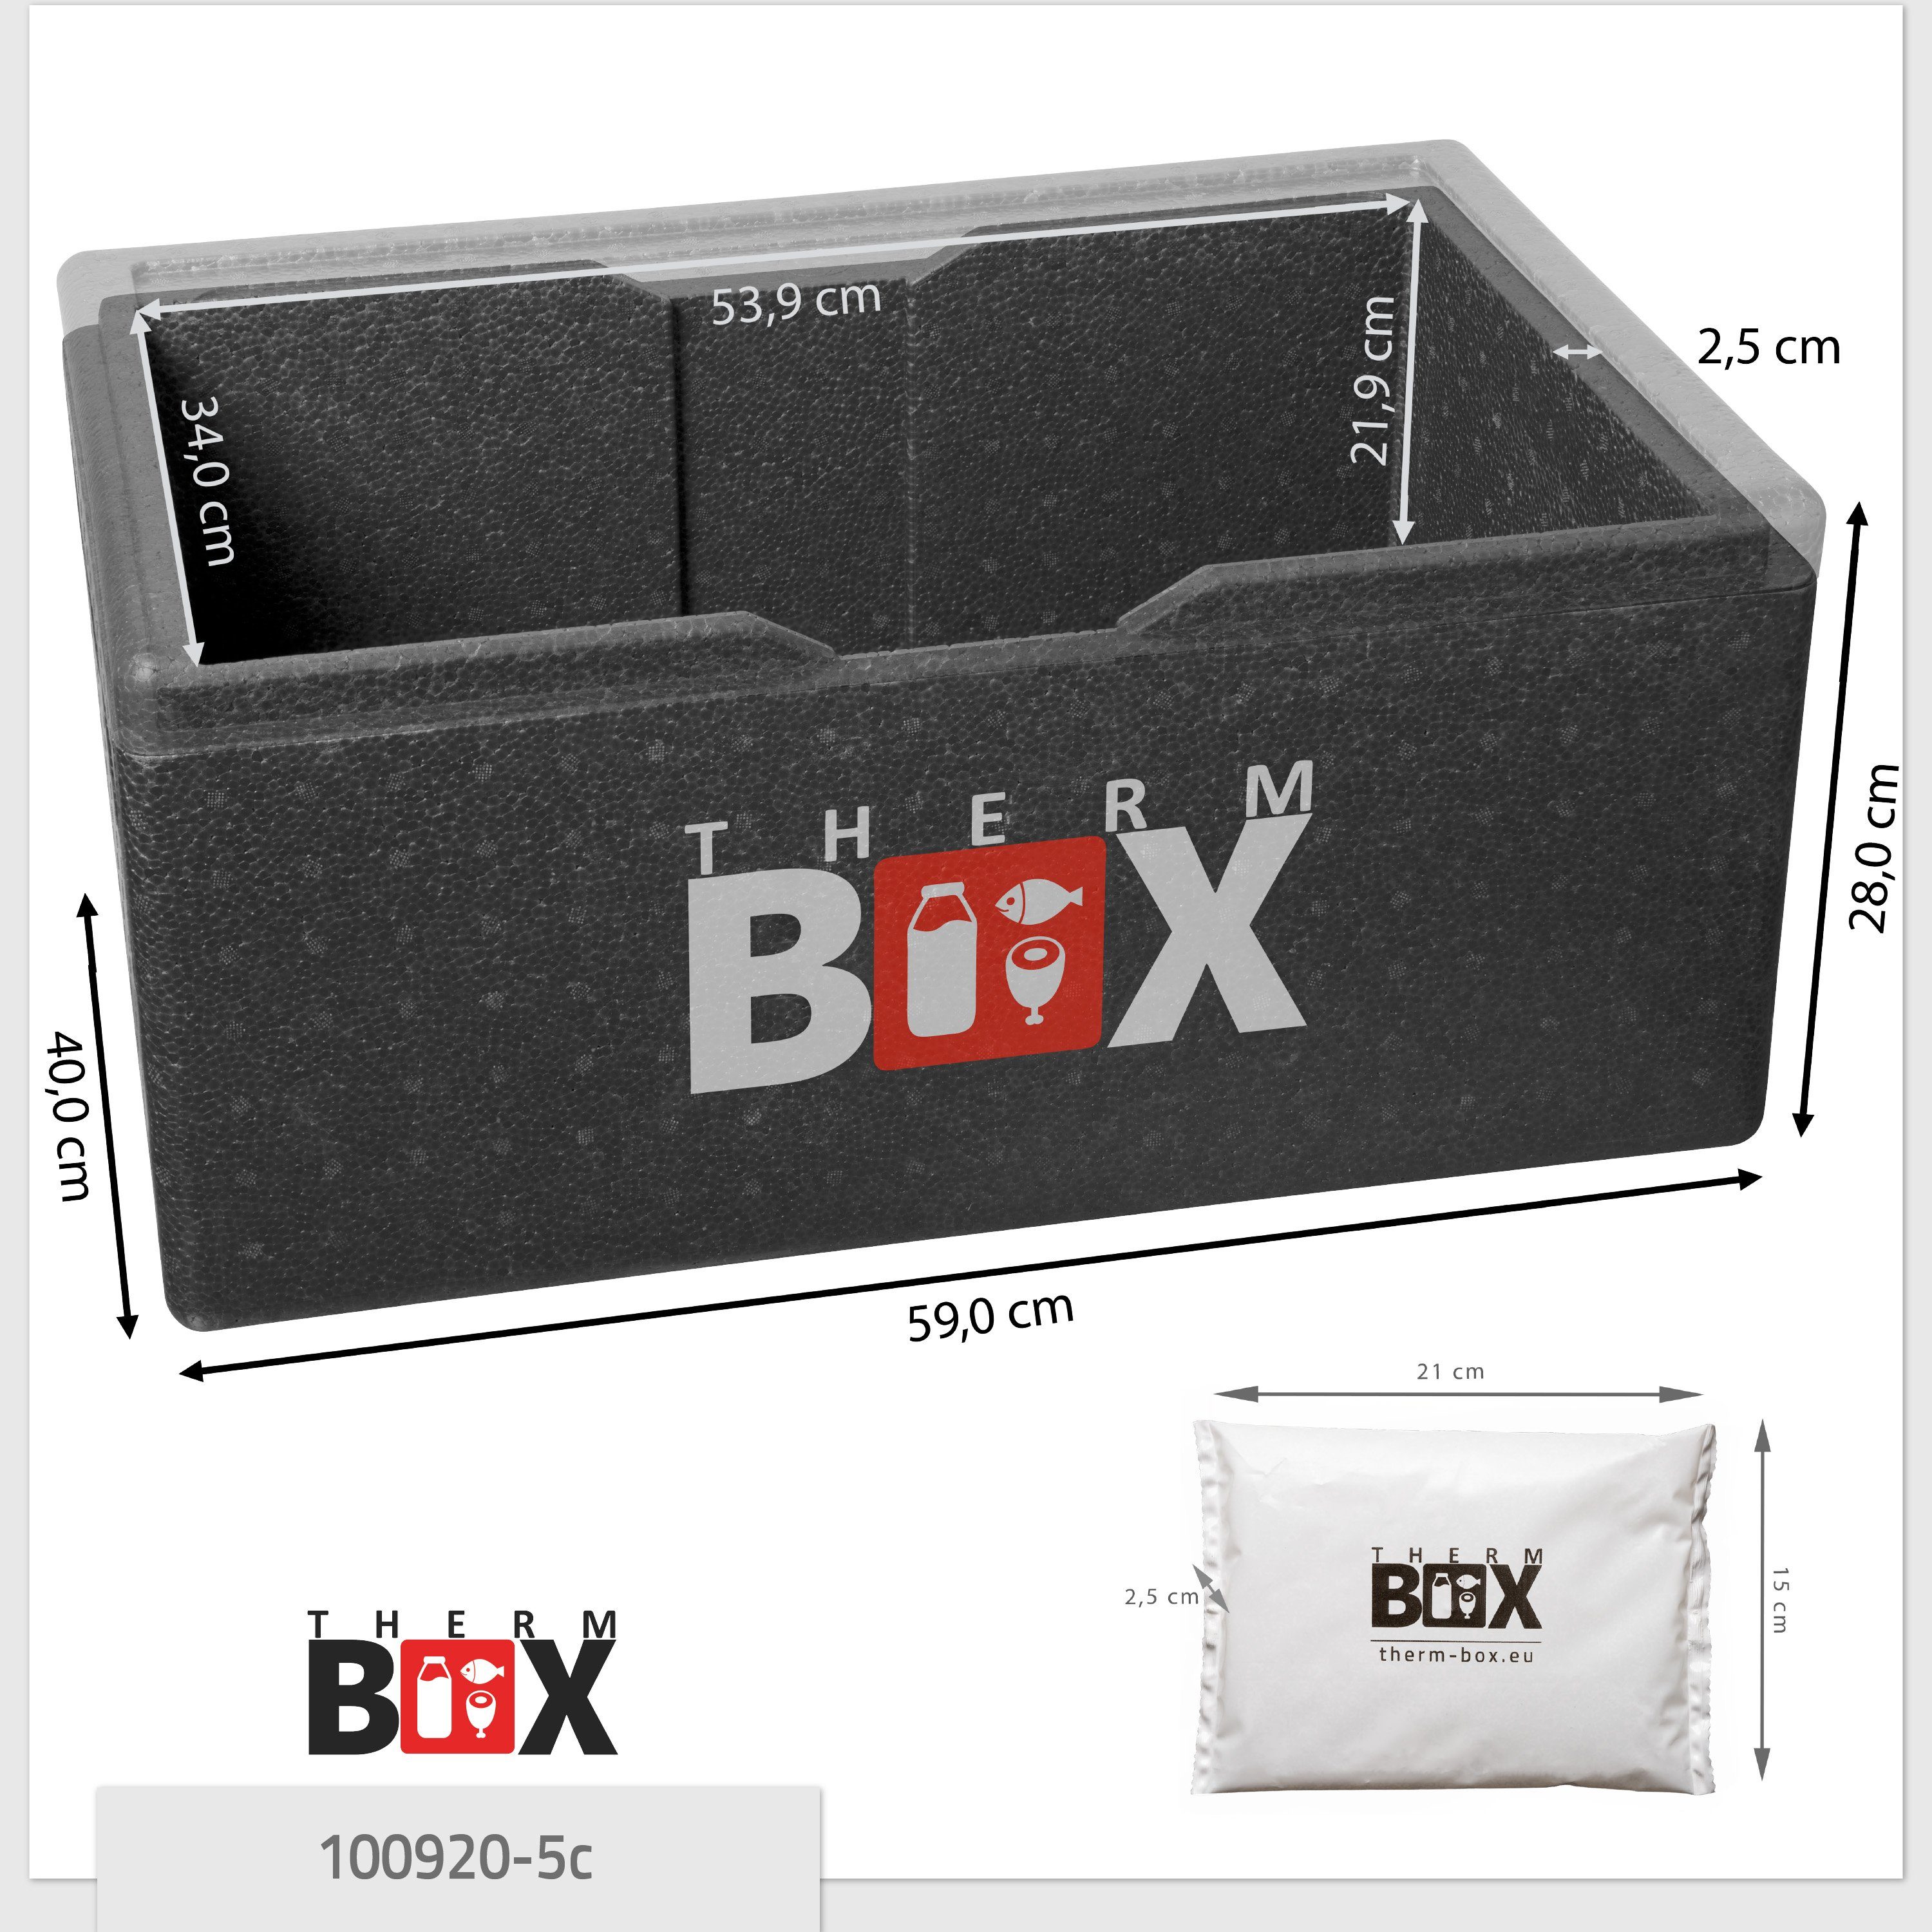 (0-tlg., Profibox Thermobehälter GN Gastro Thermbox für 54x34x22cm mit Kühlkissen), THERM-BOX Styropor-Piocelan, Transportbox 40L Kühlakku Innen: Kühlkissen, Kühlbox mit 5